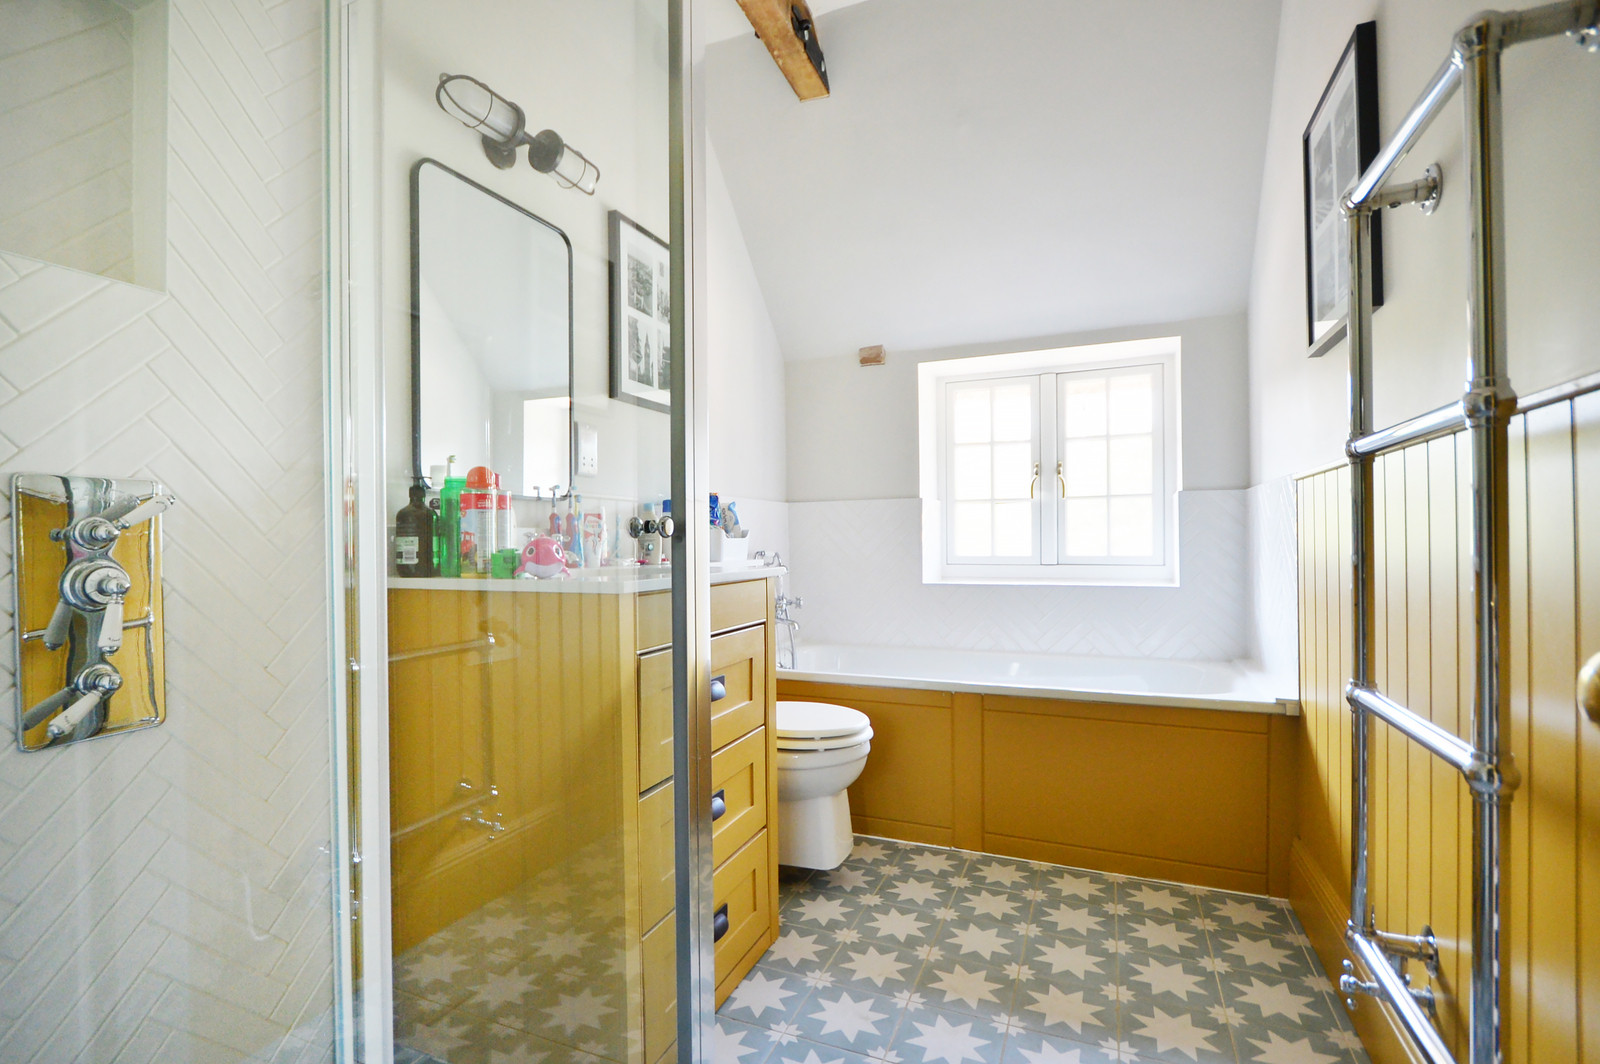 Bathroom - Home Renovation, Marlborough